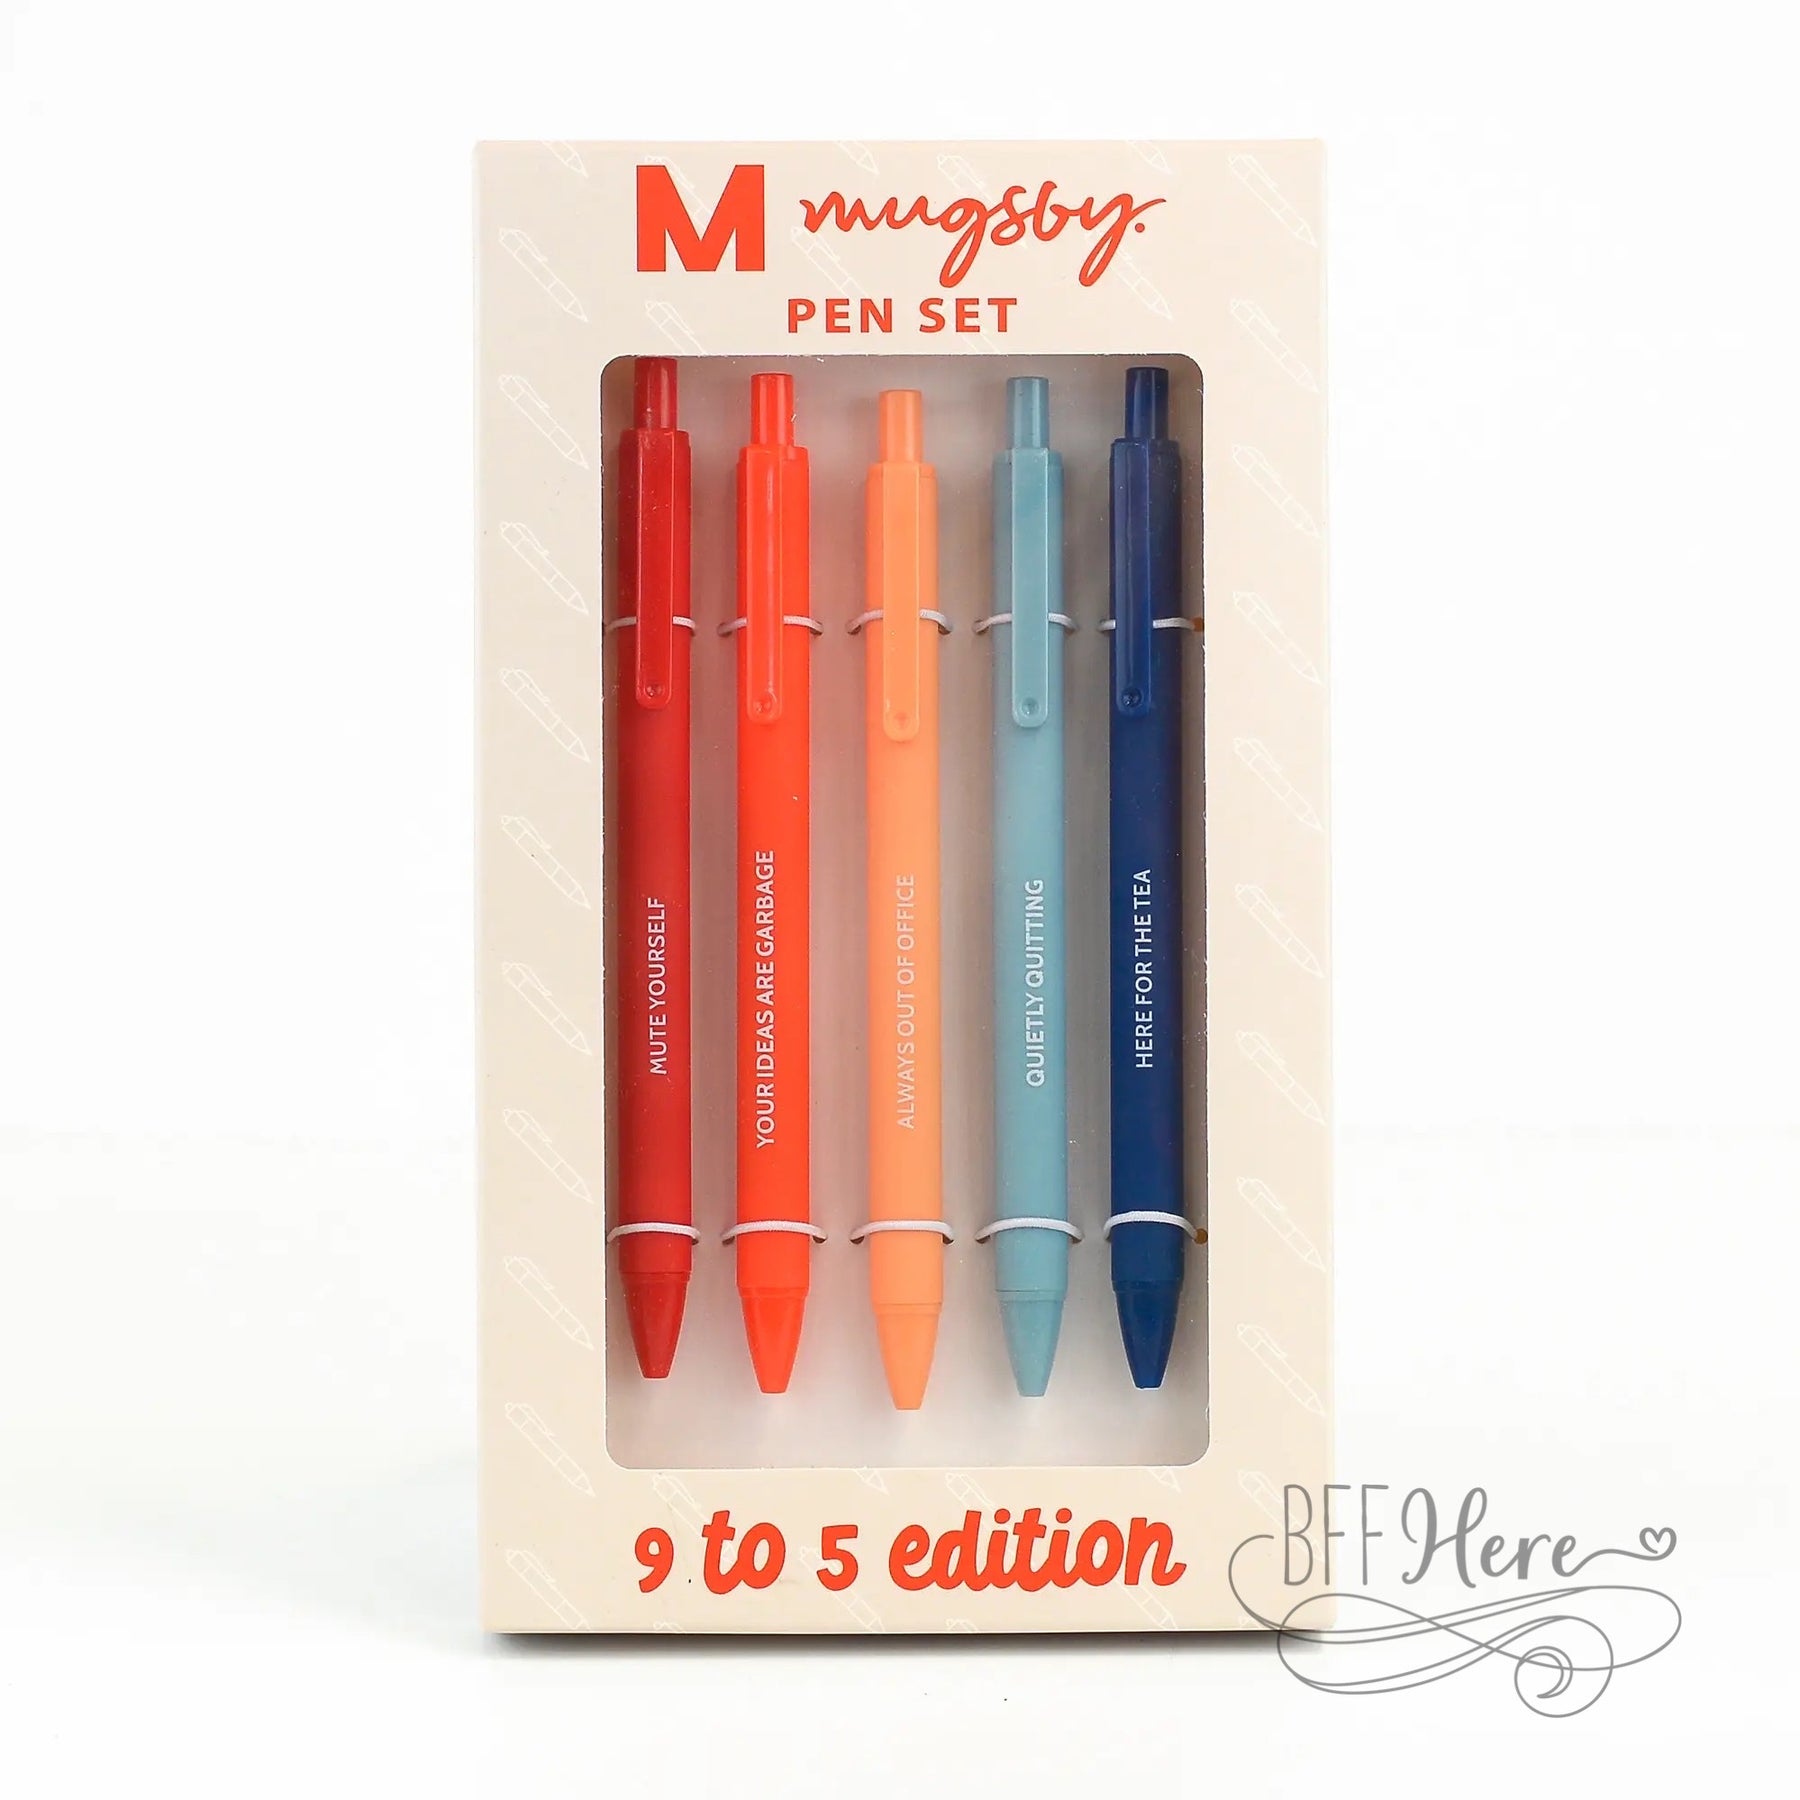 Working 9-5 Pen Set Edition, Pens, Pen Set, Funny Pens